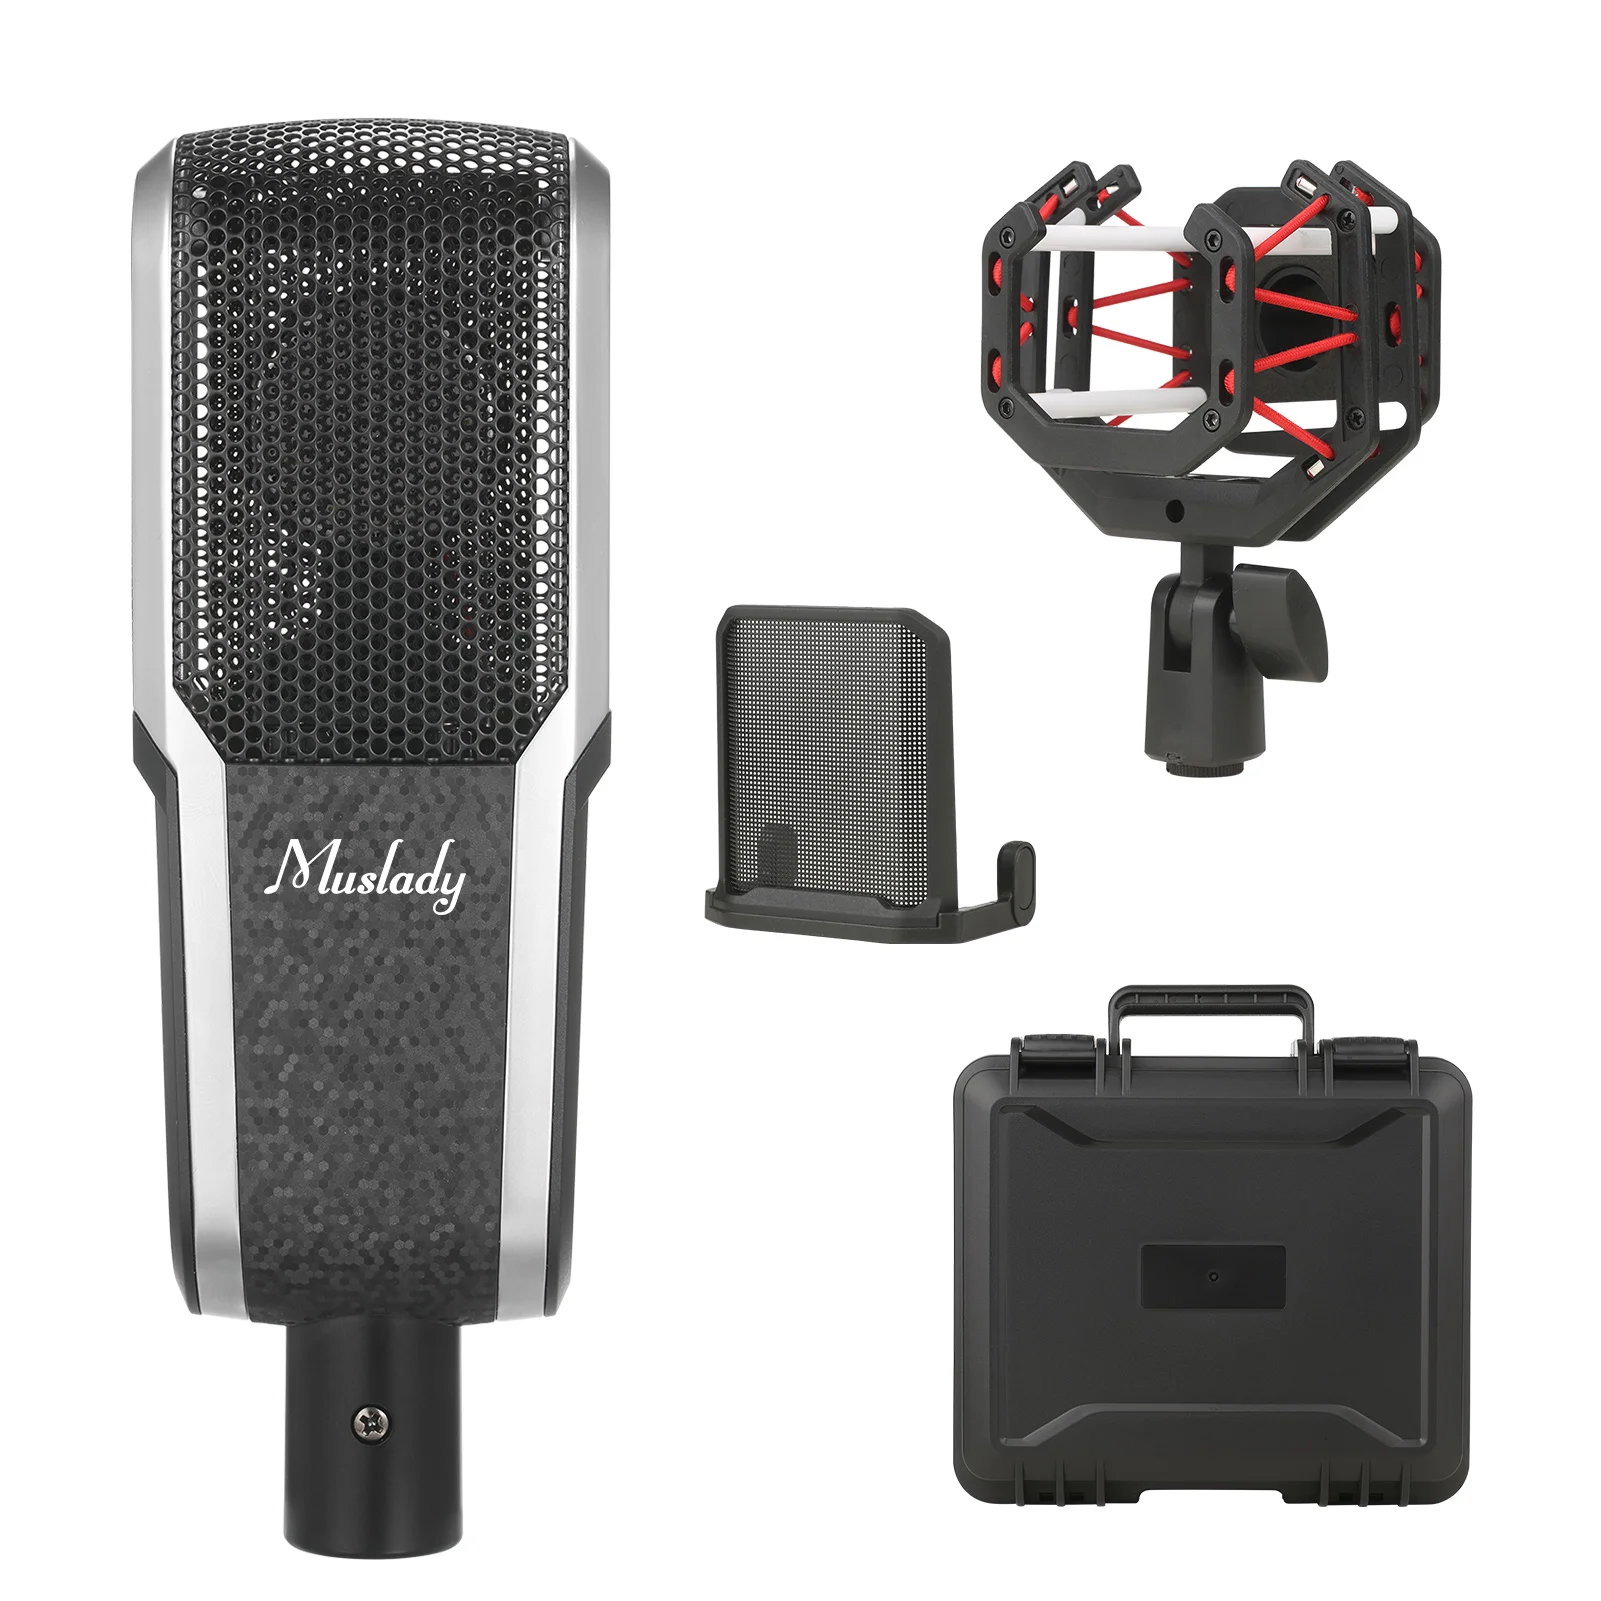 

Muslady 26mm Diaphragm Condenser Microphone XLR Studio Cardioid Condenser Microphone Kit with Shock Mount Clip Mic Carry Case